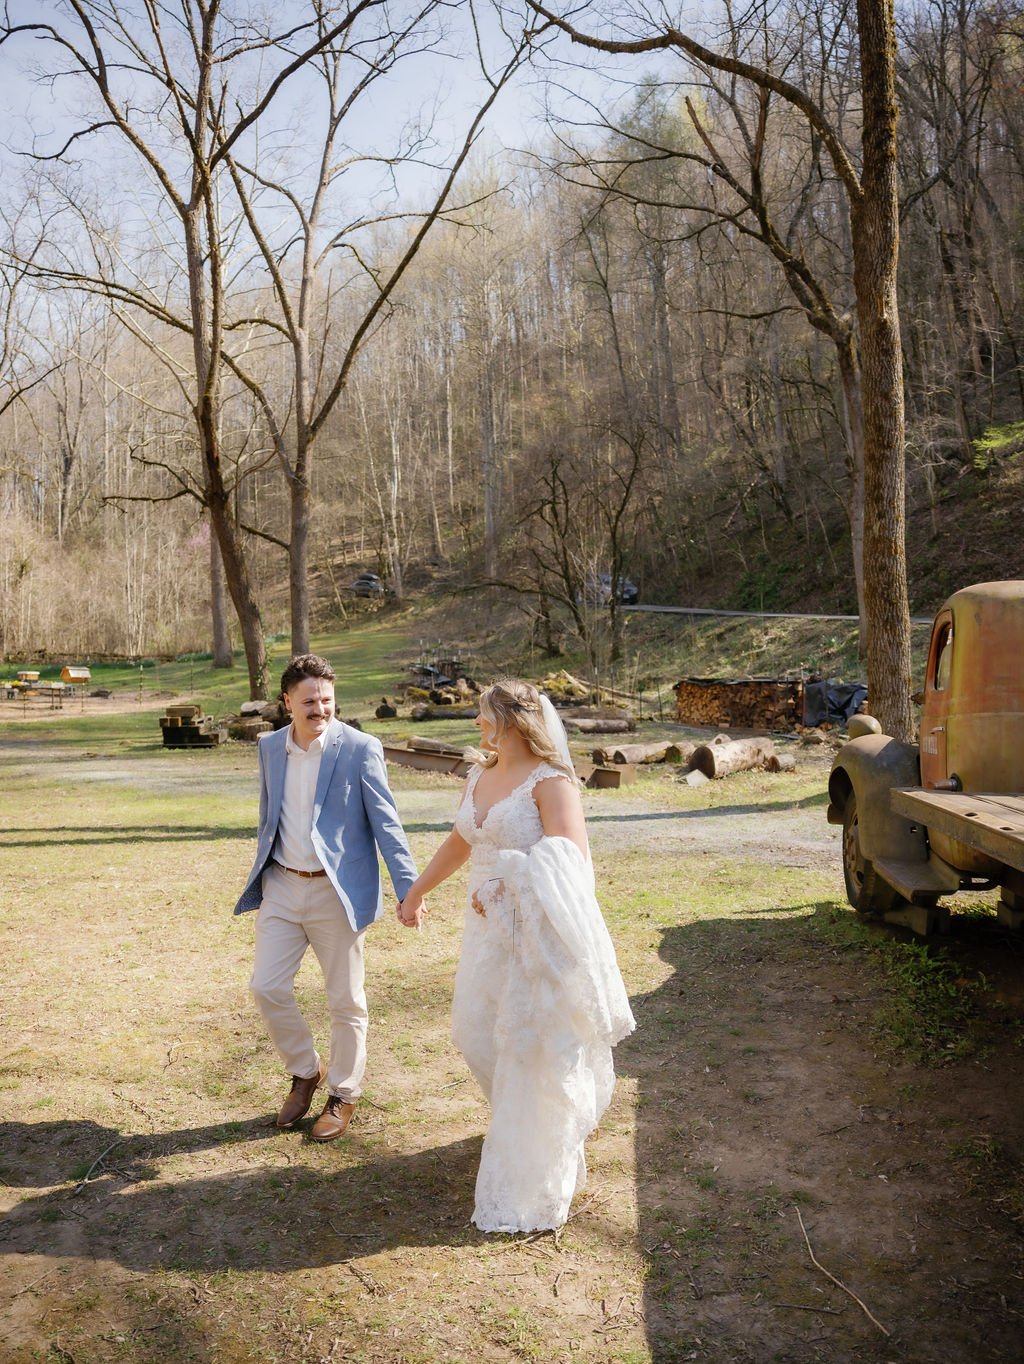 gatlinburg-photographer-tips-for-a-romantic-gatlinburg-elopement-ceremony-bride-groom-walking-together